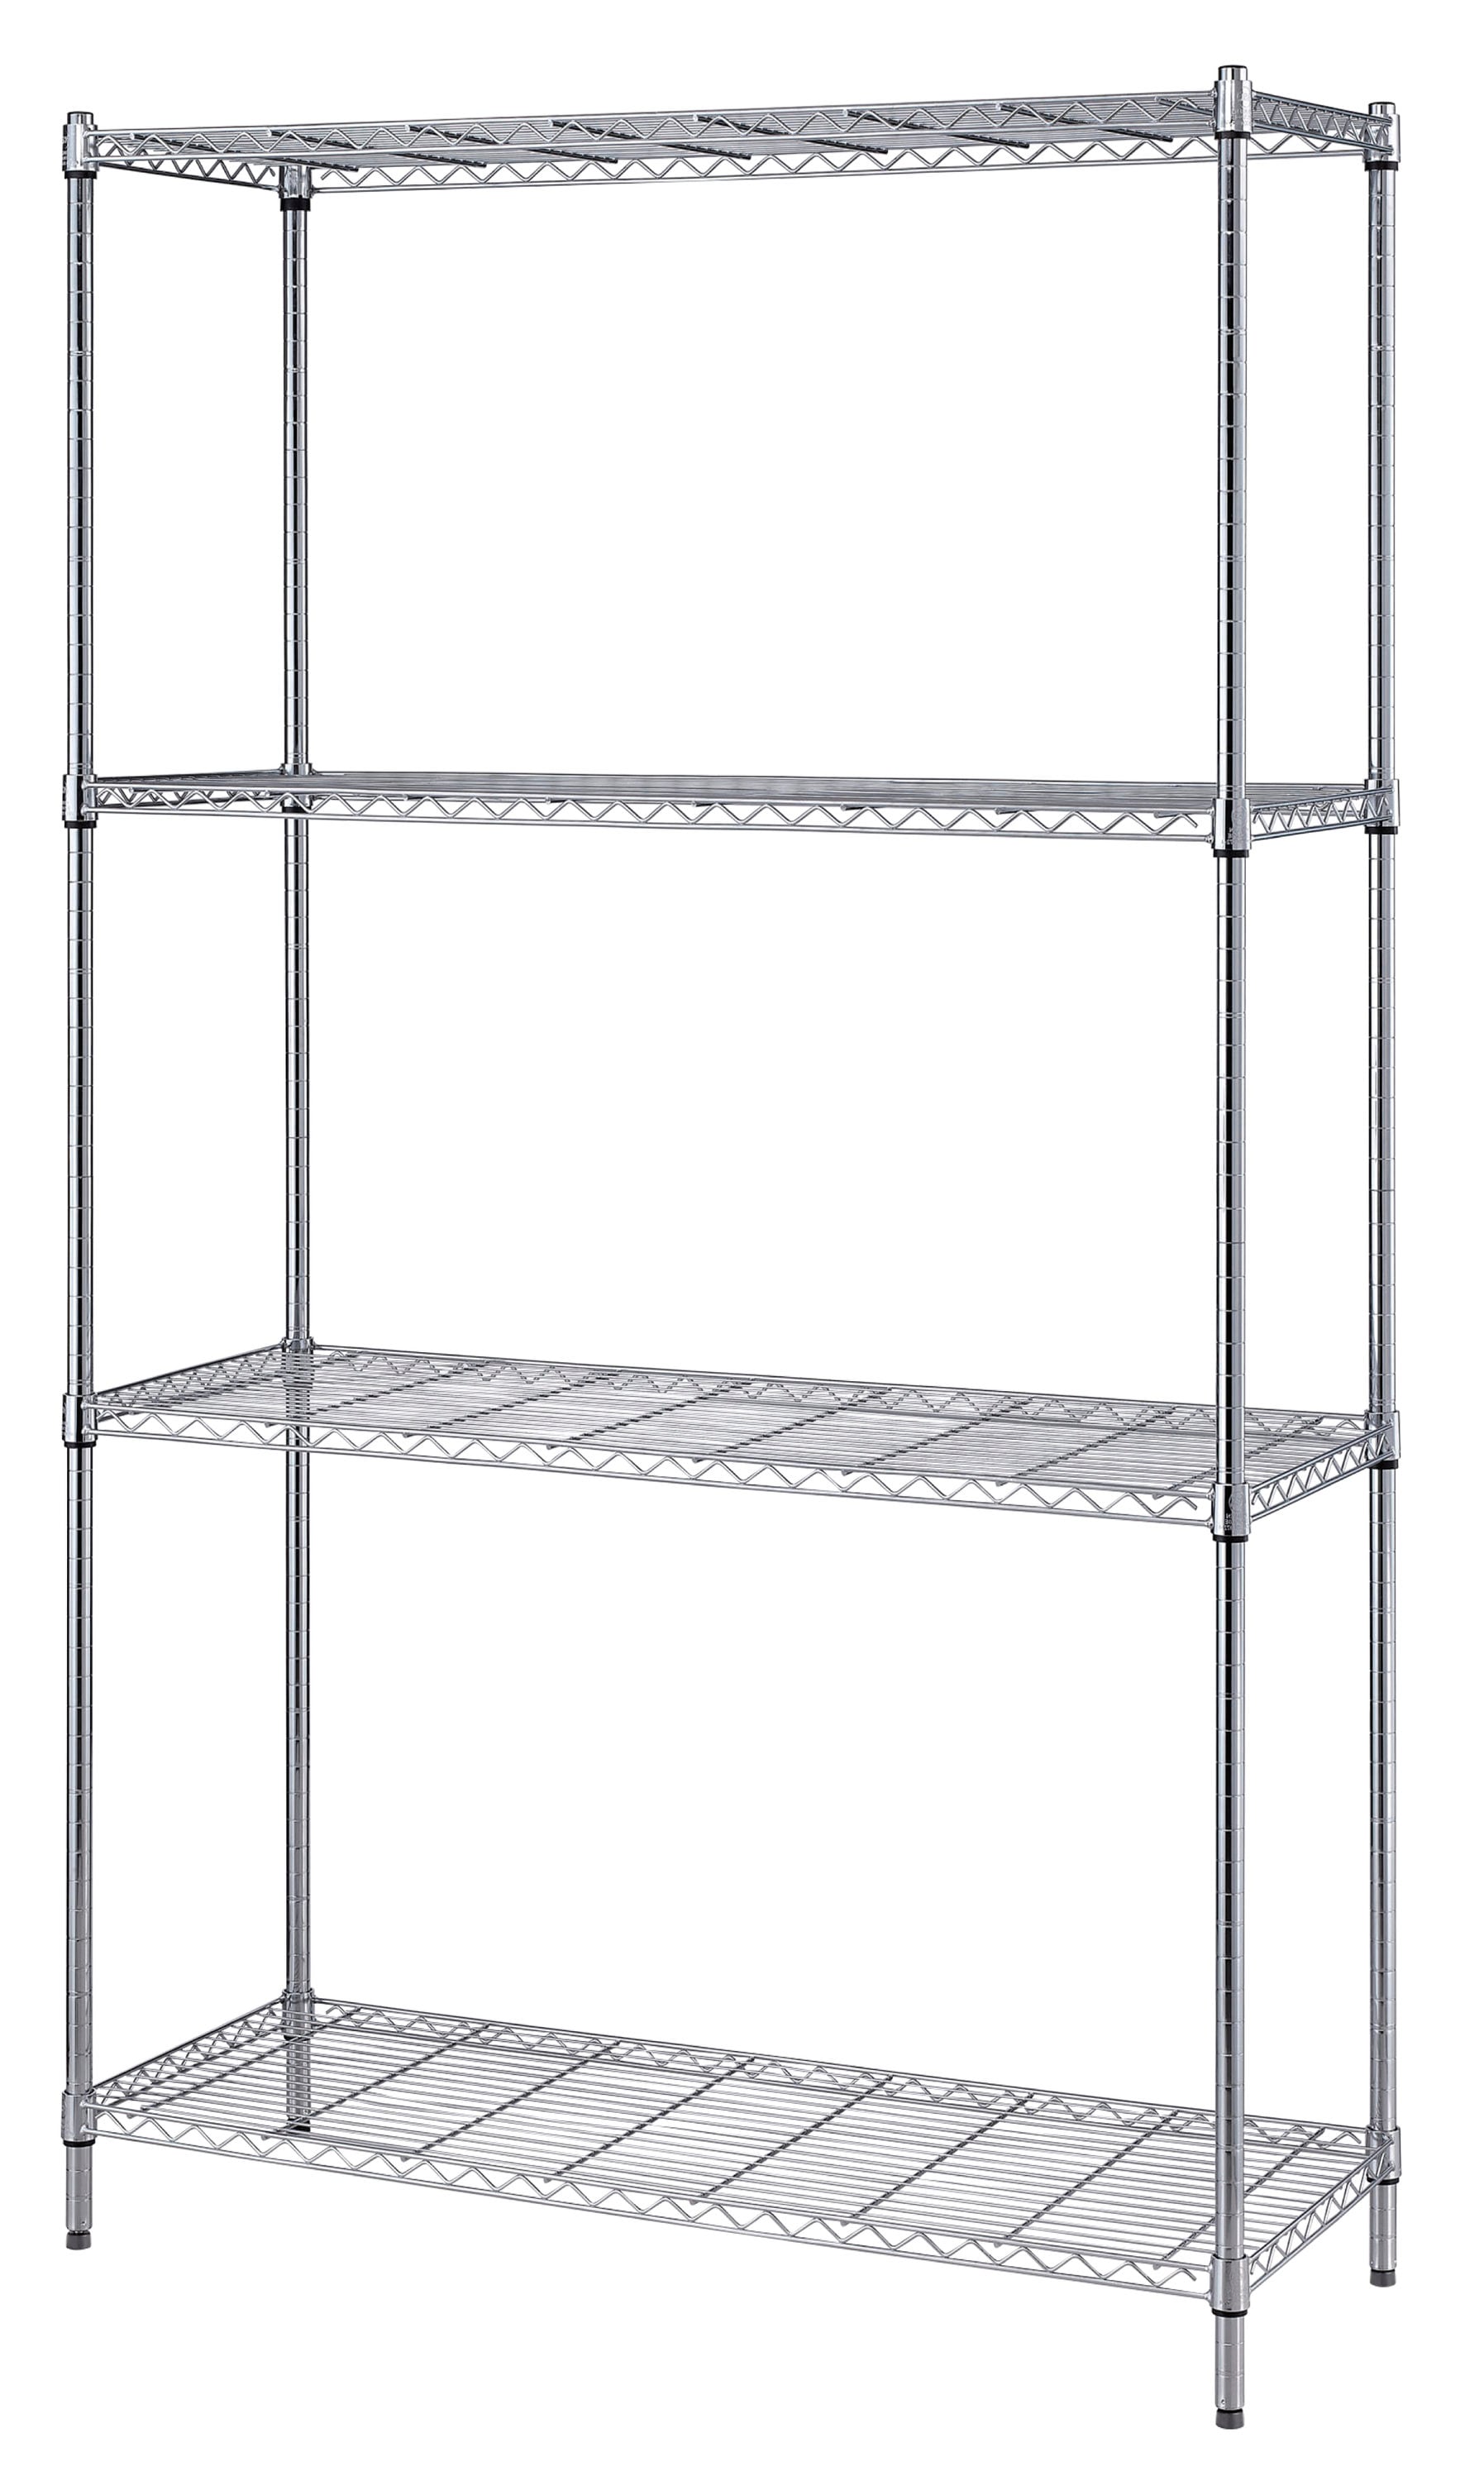 4 Tier Corner Shelves Wire Shelving Rack Shelf Adjustable Storage Unit Organizer 